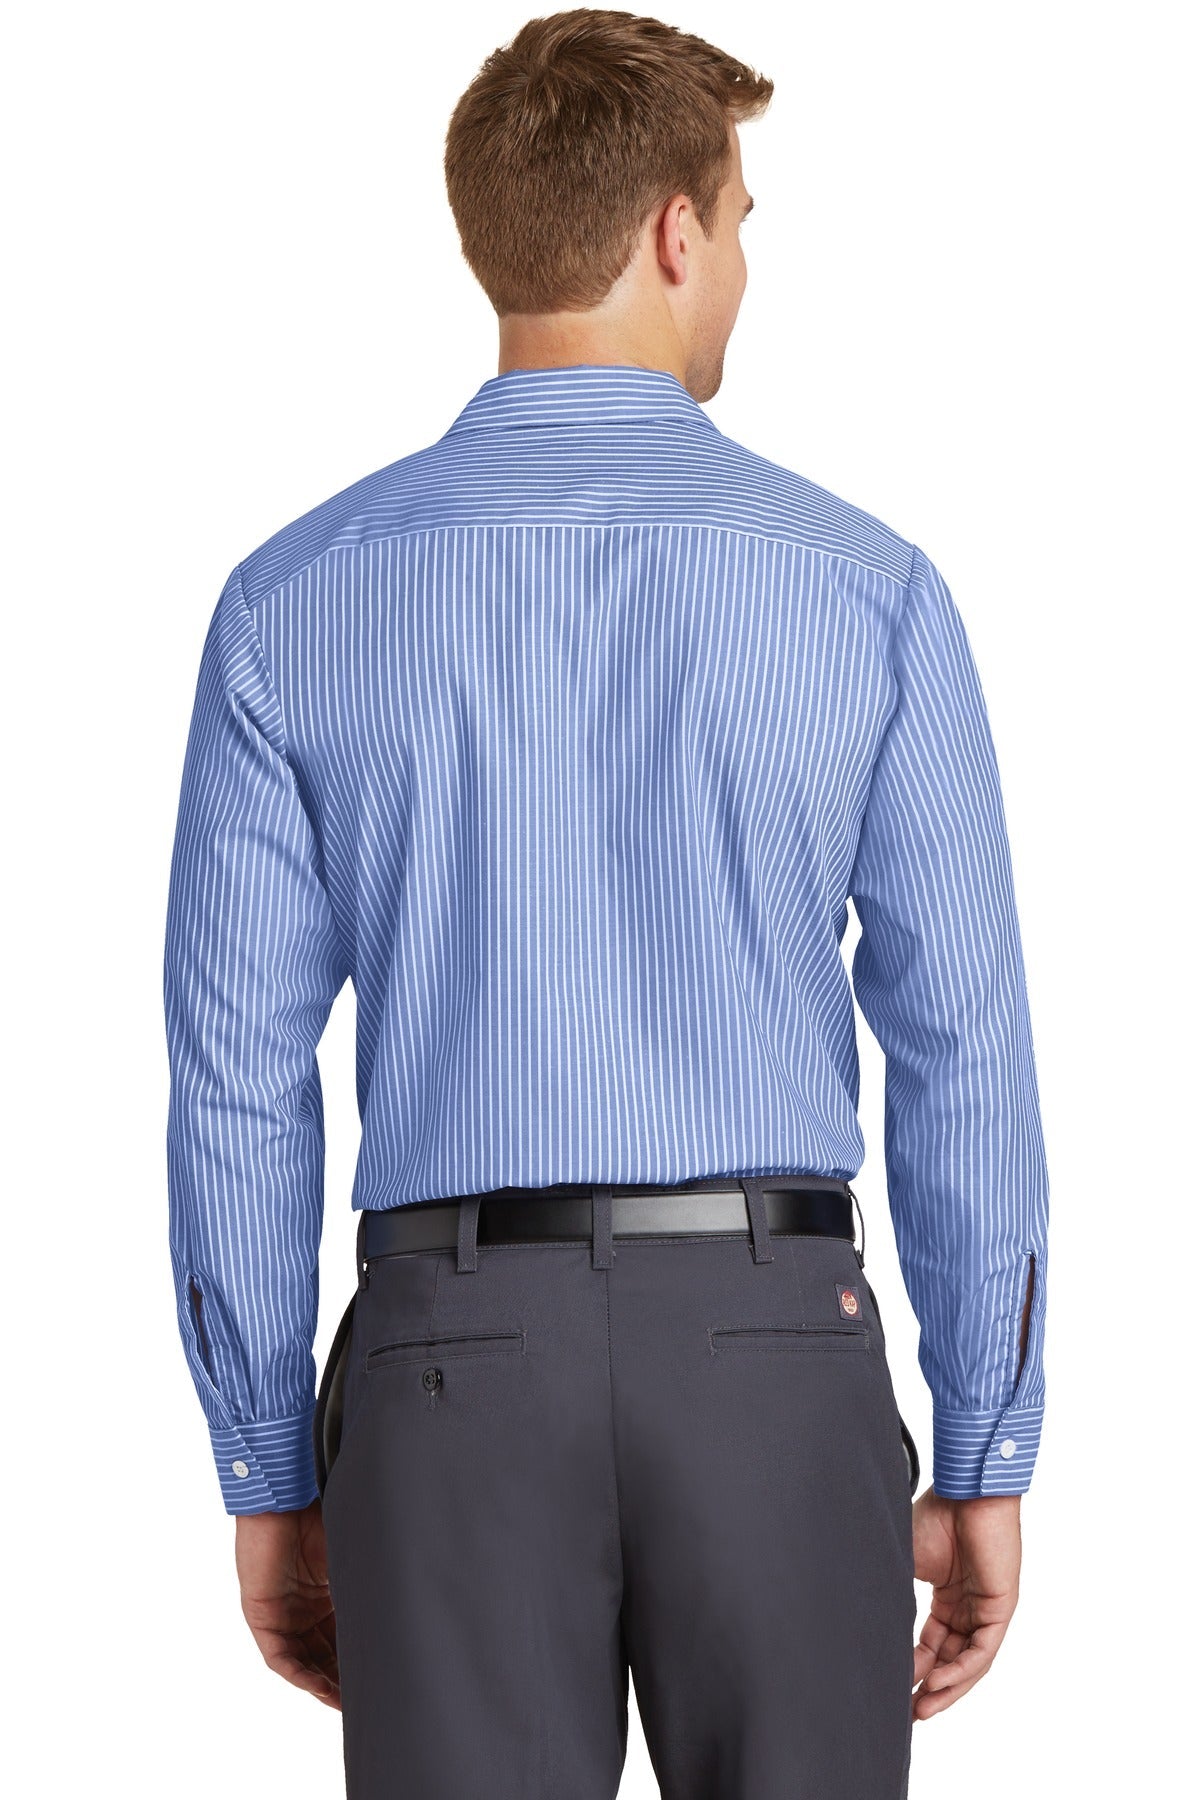 Red Kap® Long Size, Long Sleeve Striped Industrial Work Shirt. CS10LONG - DFW Impression